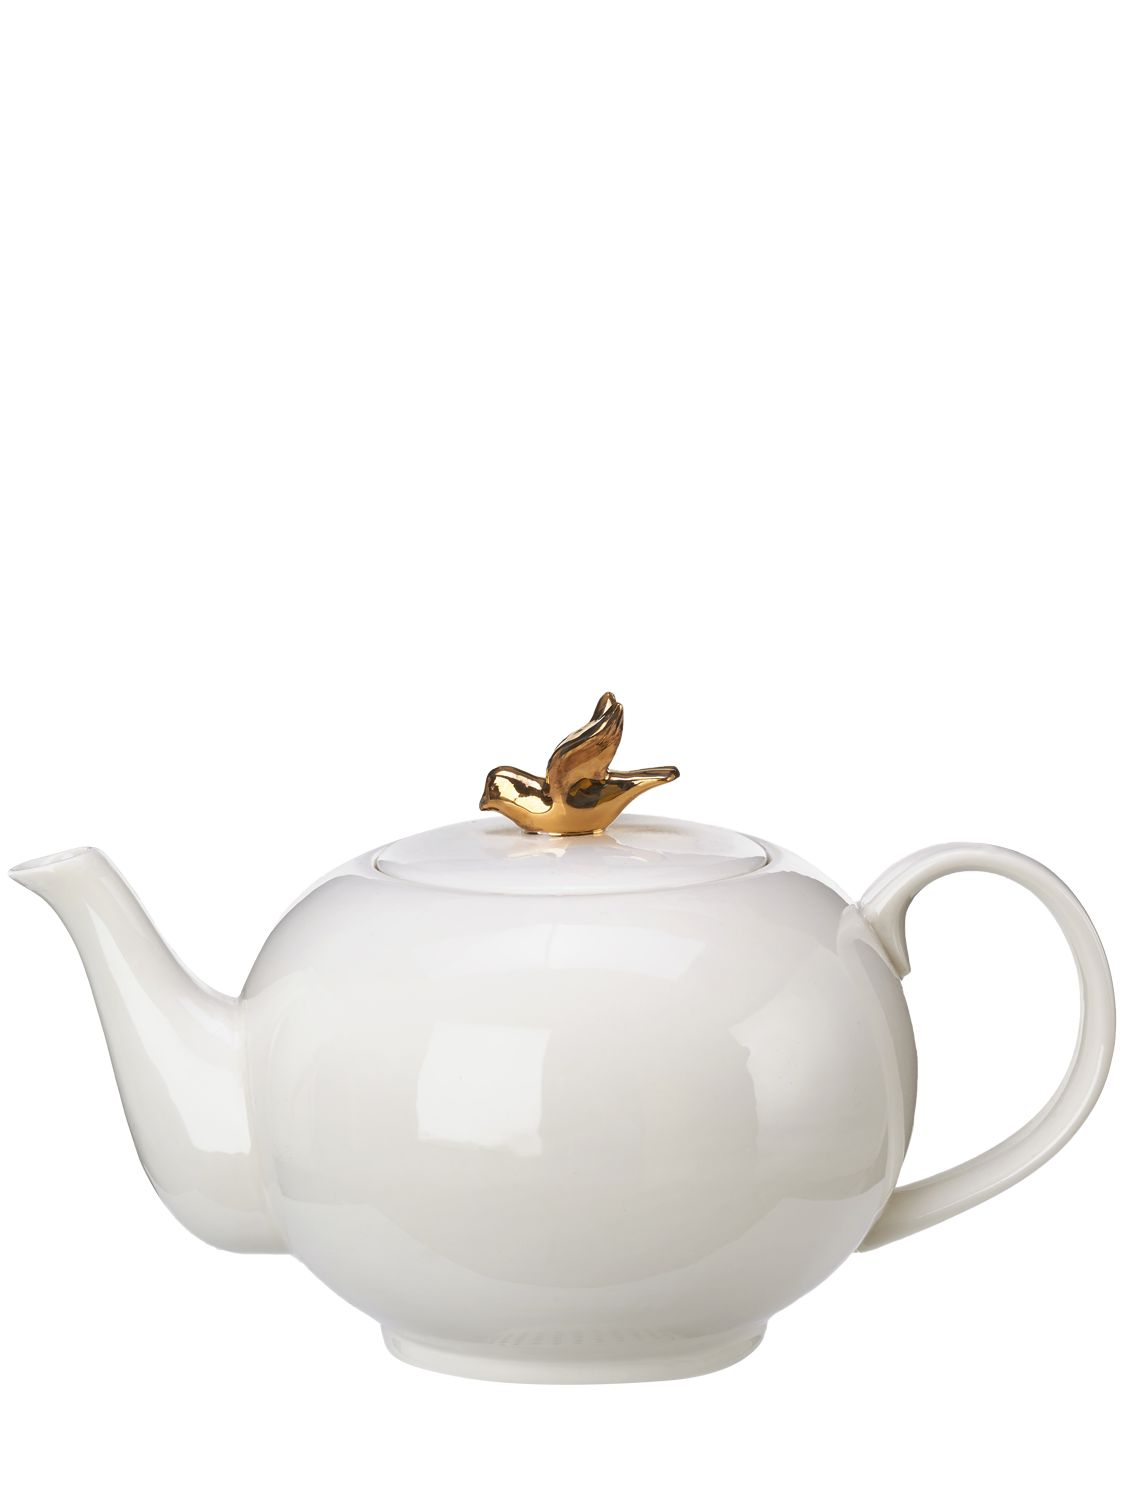 Polspotten Freedom Bird Teapot In White